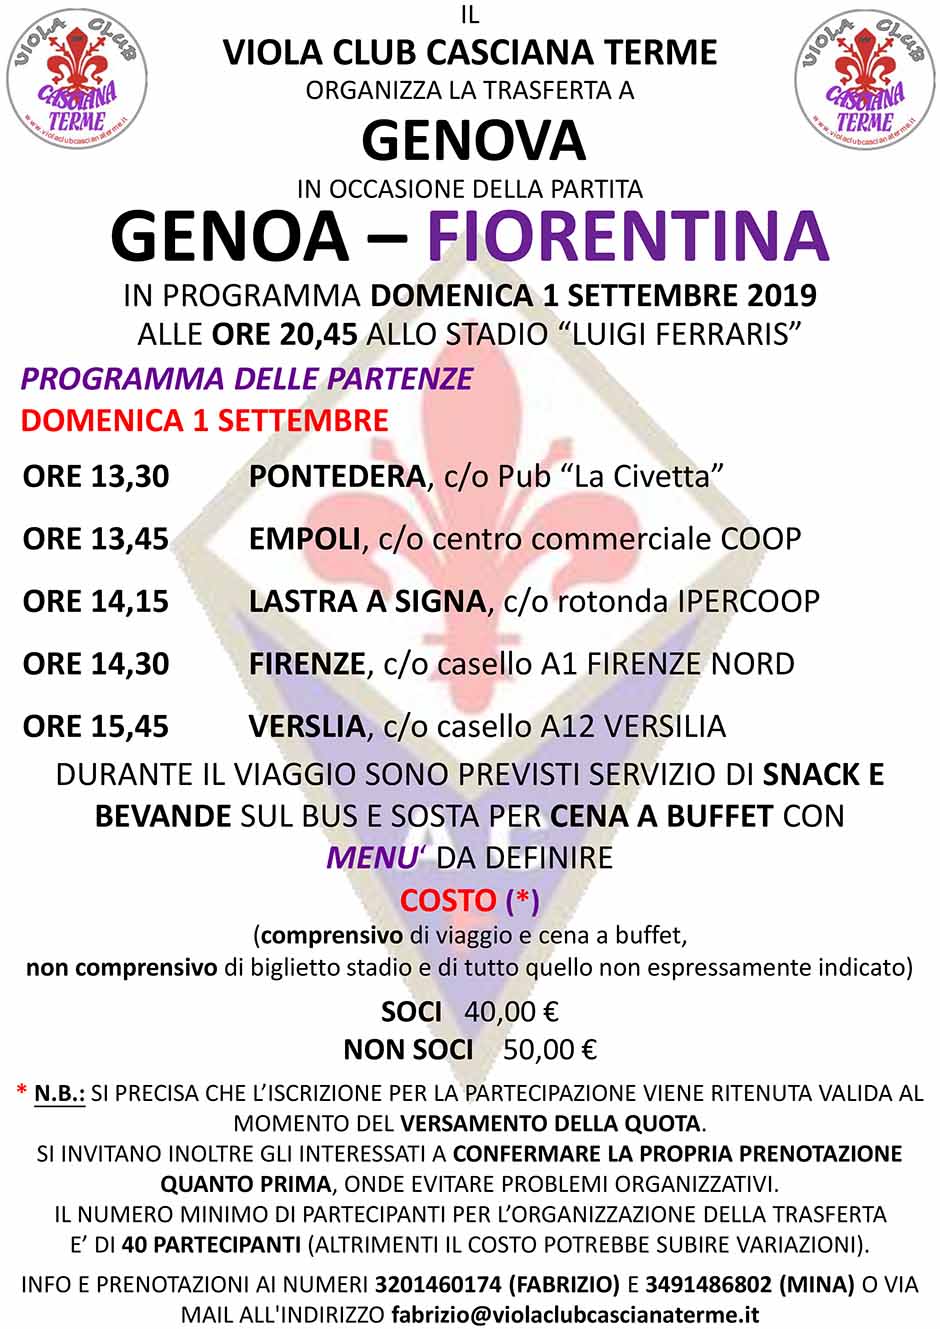 Trasferta Genoa 2019